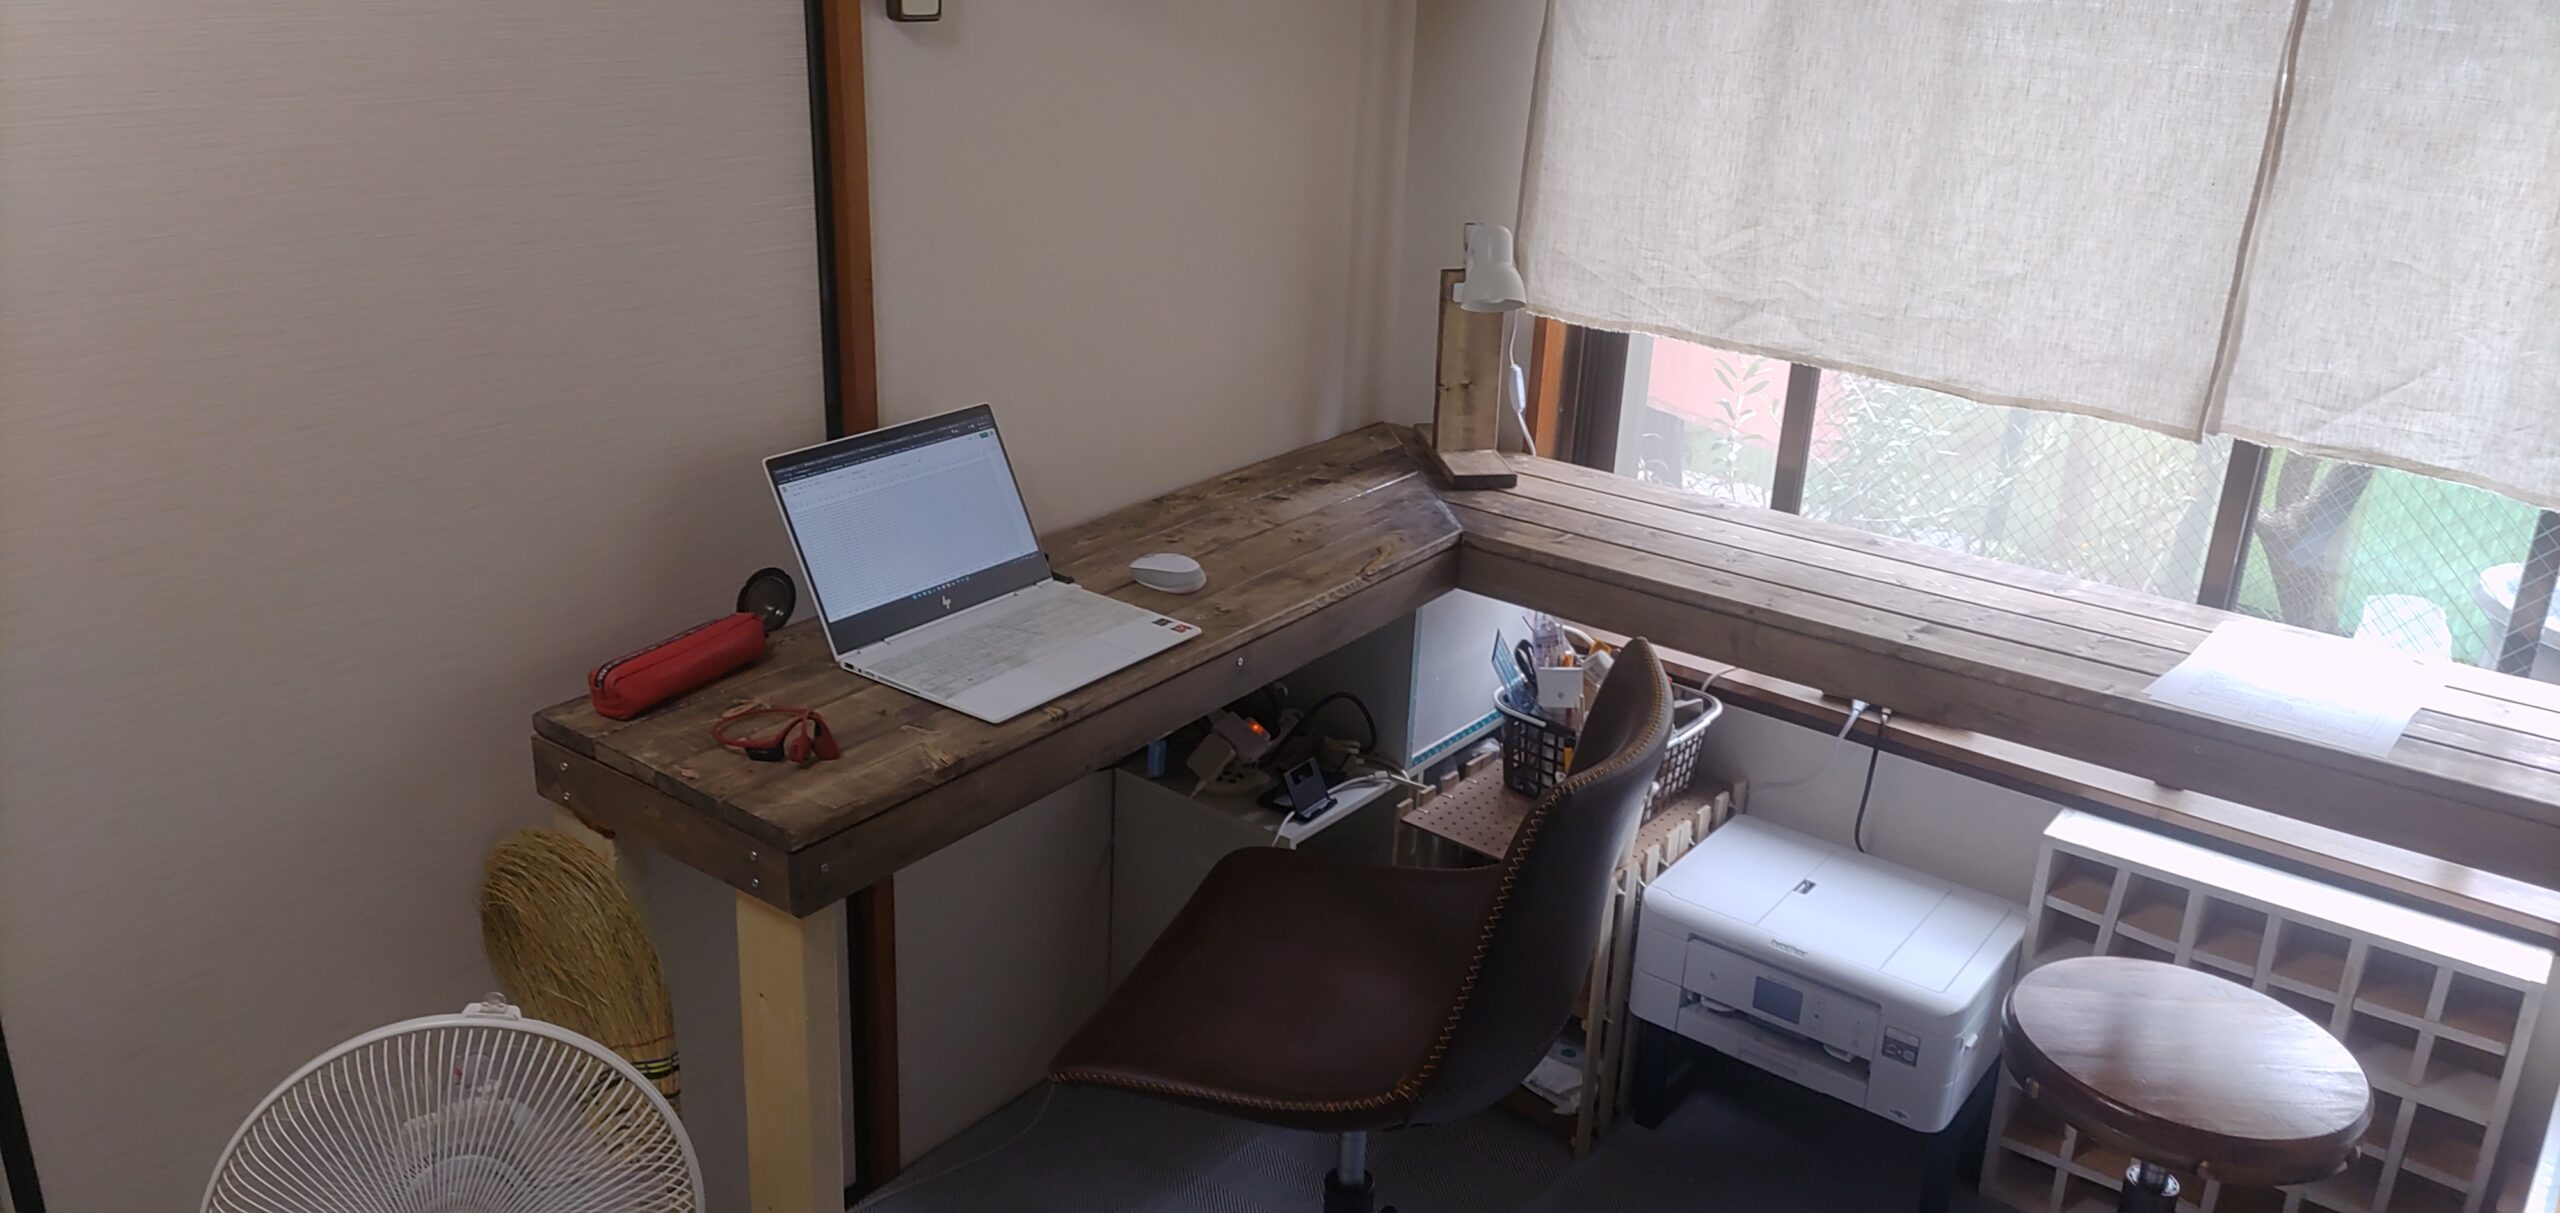 DIY-Desk